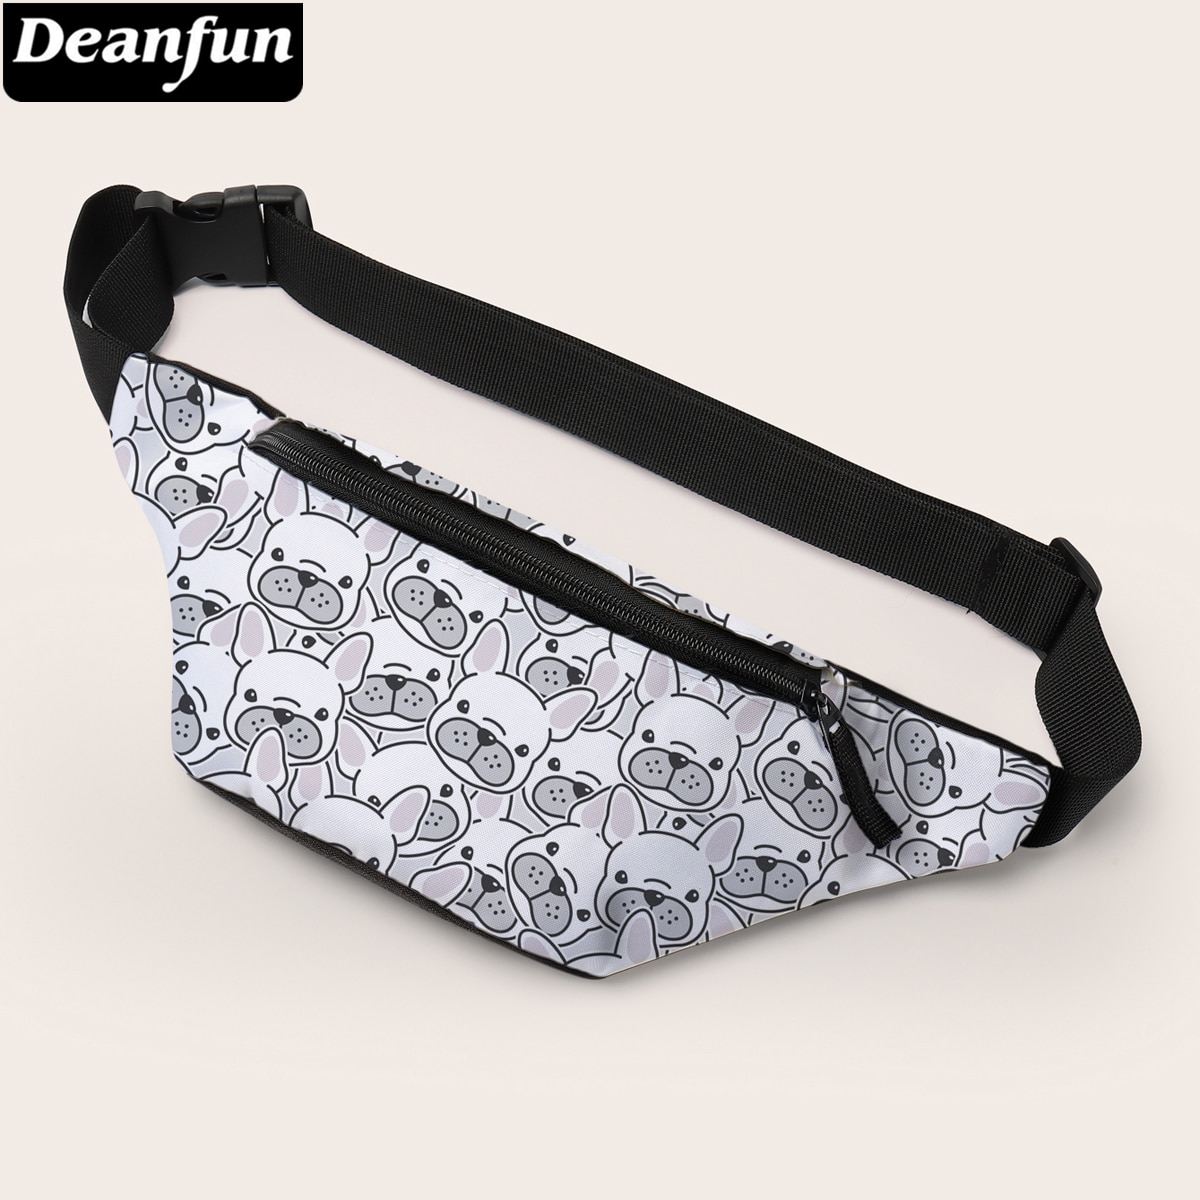 Deanfun Purse Bag Leuke Pugs Gedrukt Borst Zak Mode Fanny Pack Voor Vrouwen Dames Hip Belt Bag 18071